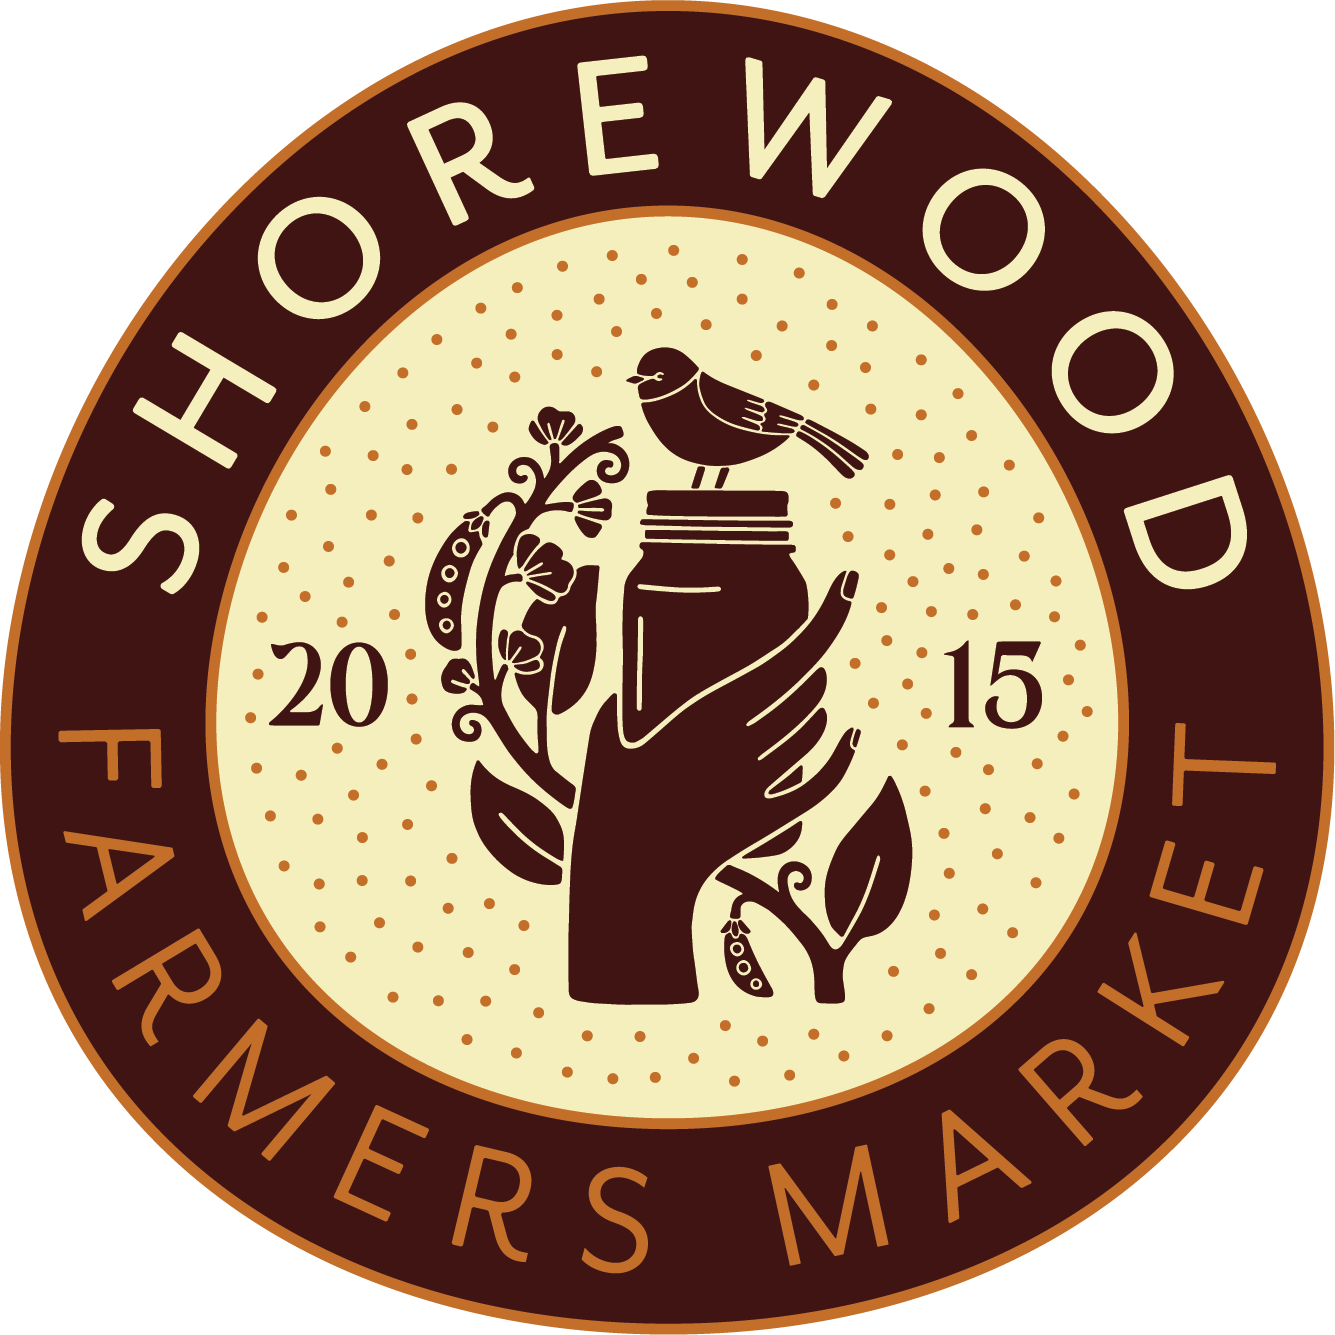 Shorewood Farmers Market logo